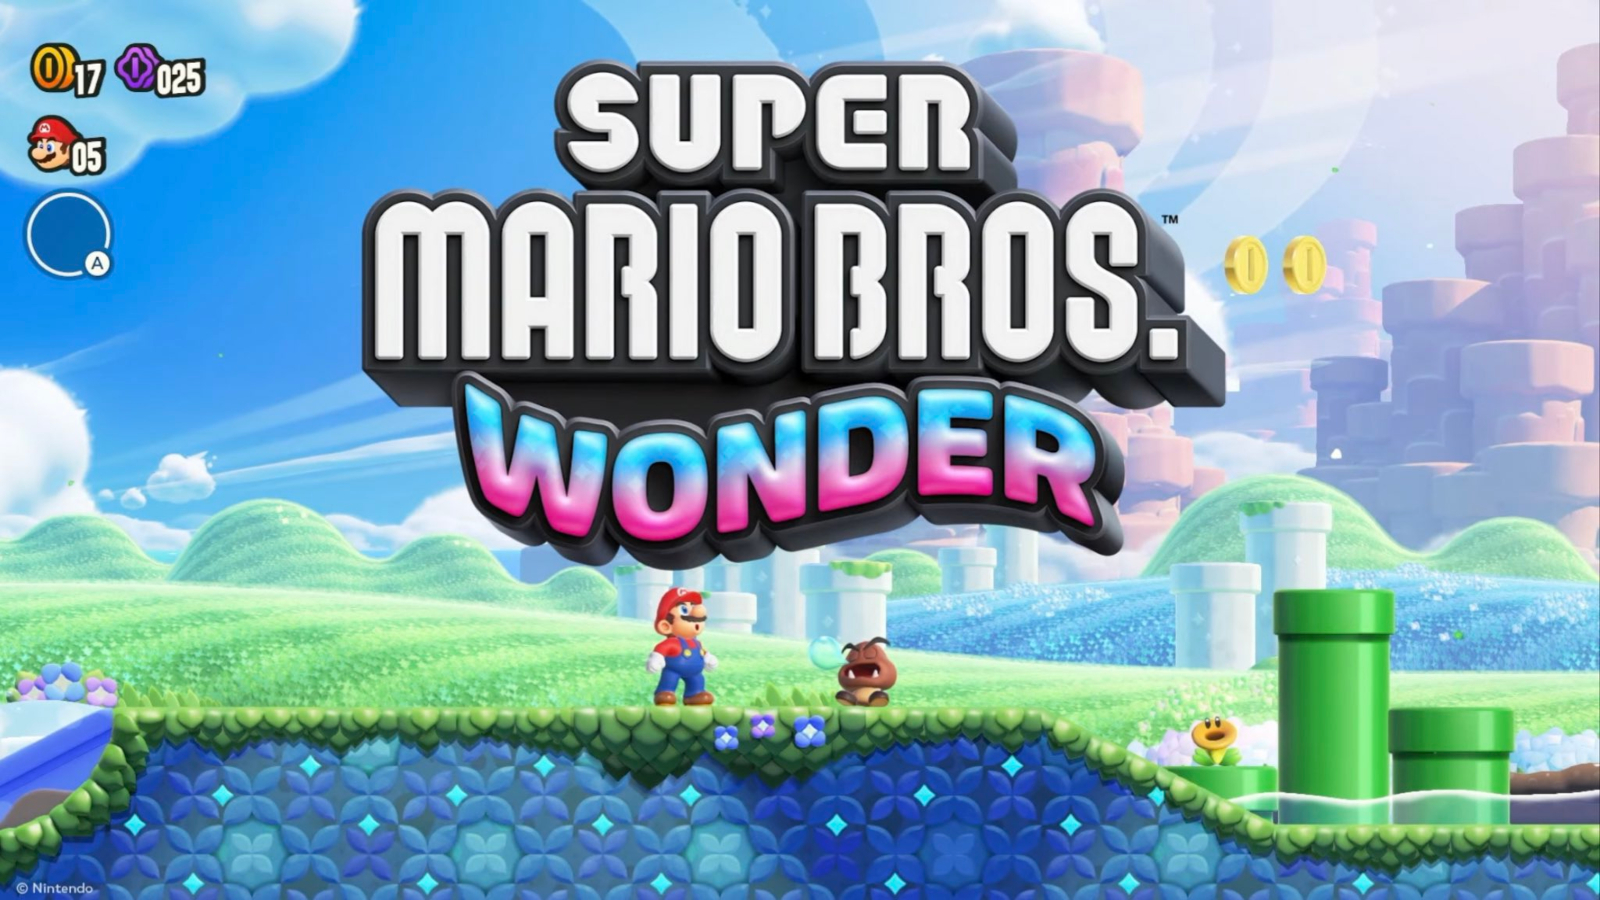 Super Mario Bros. Wonder: All Bosses